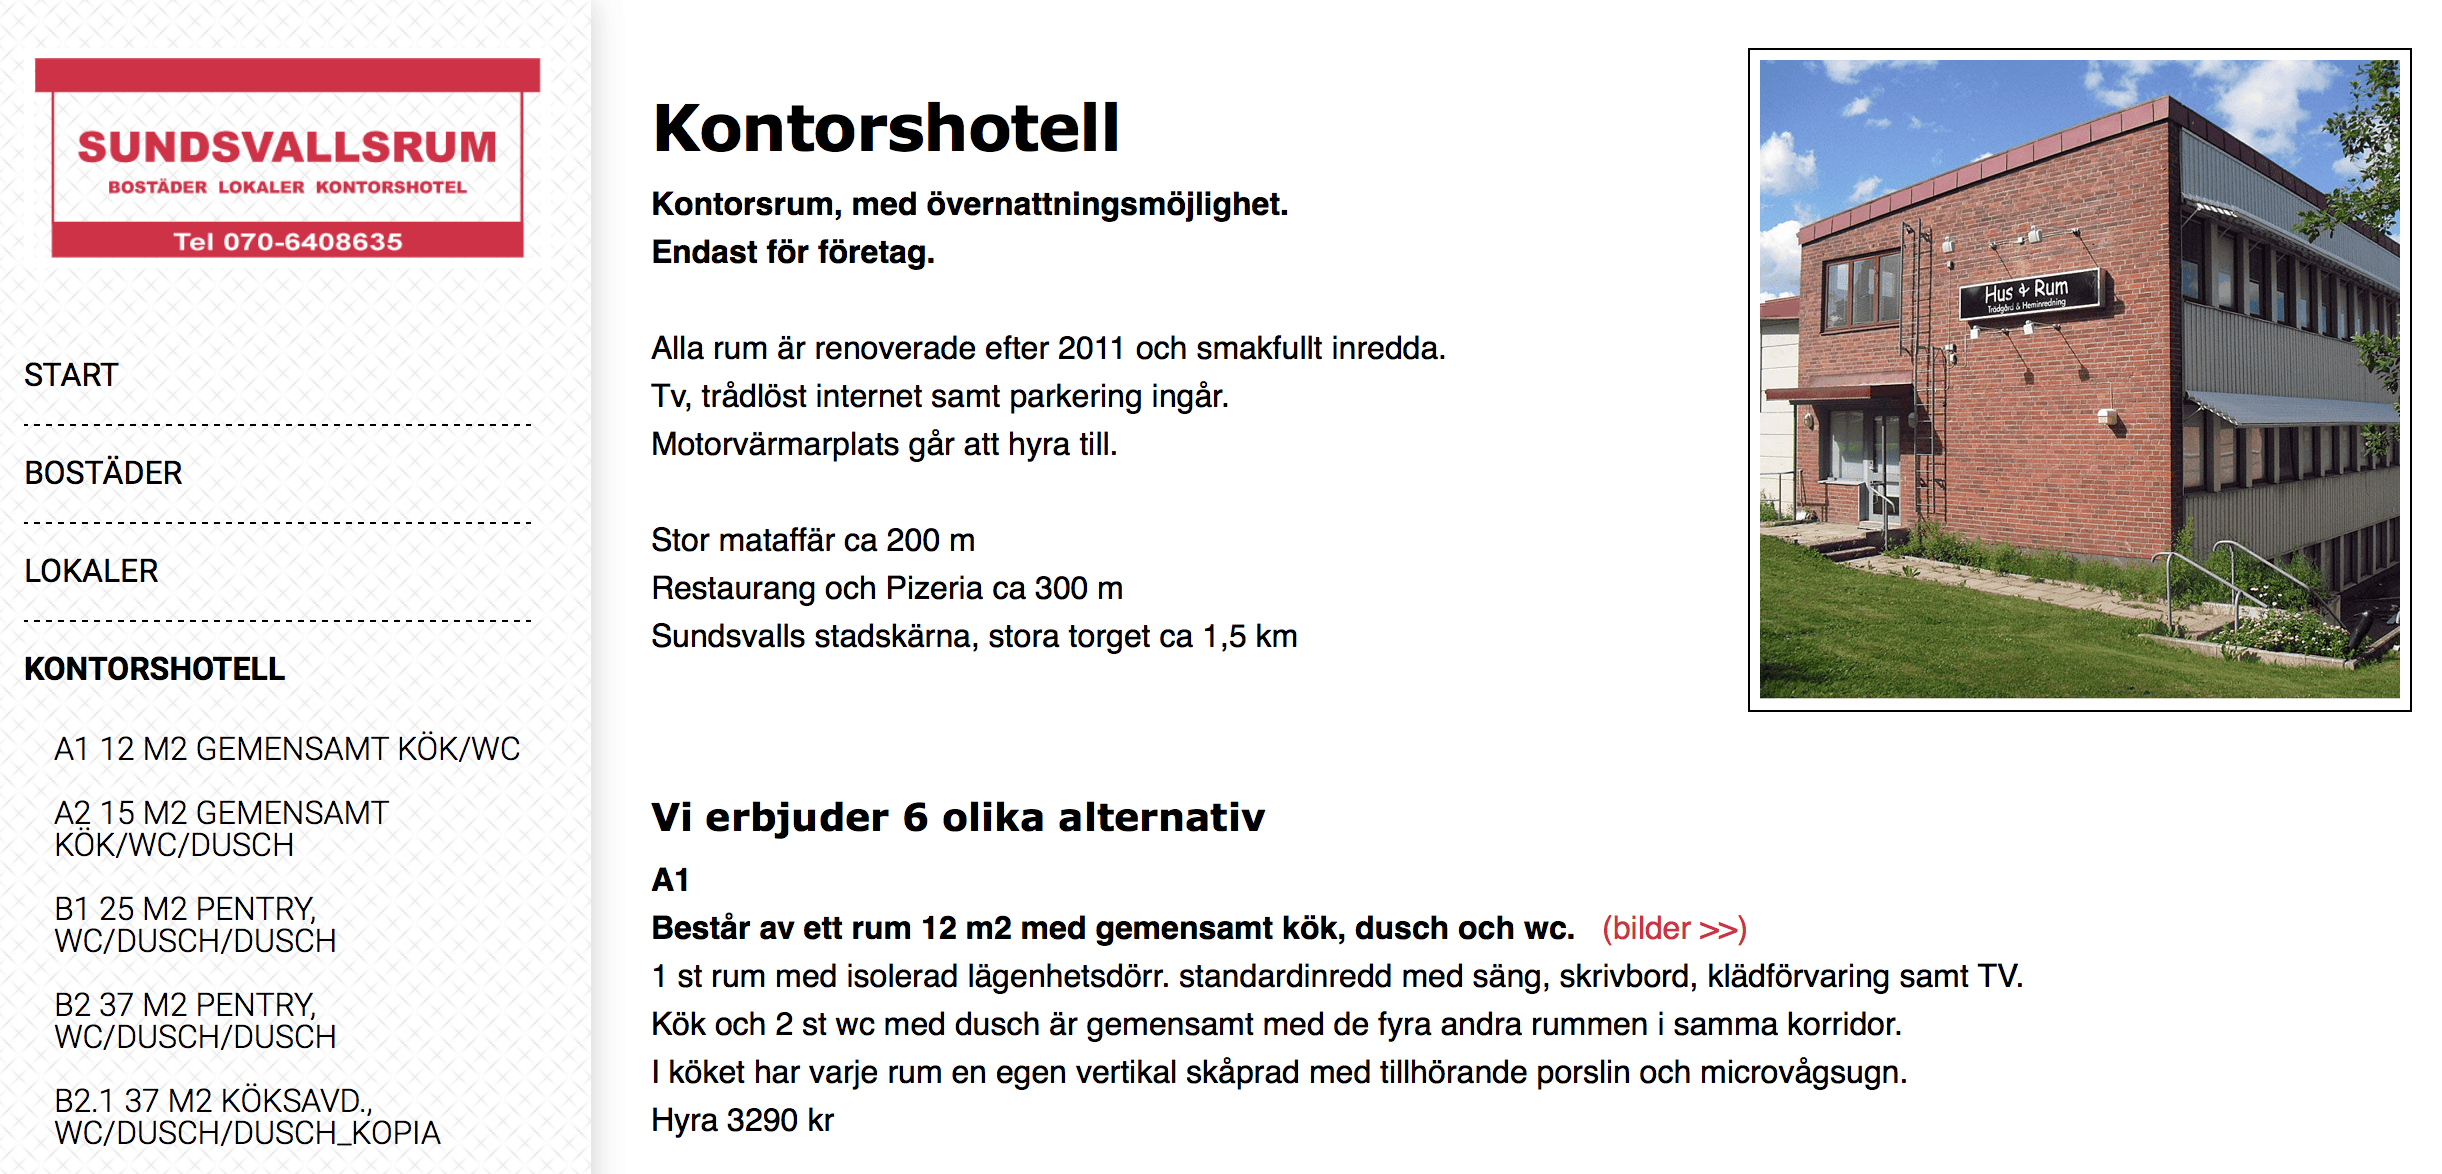 Kontorshotell Sundsvall